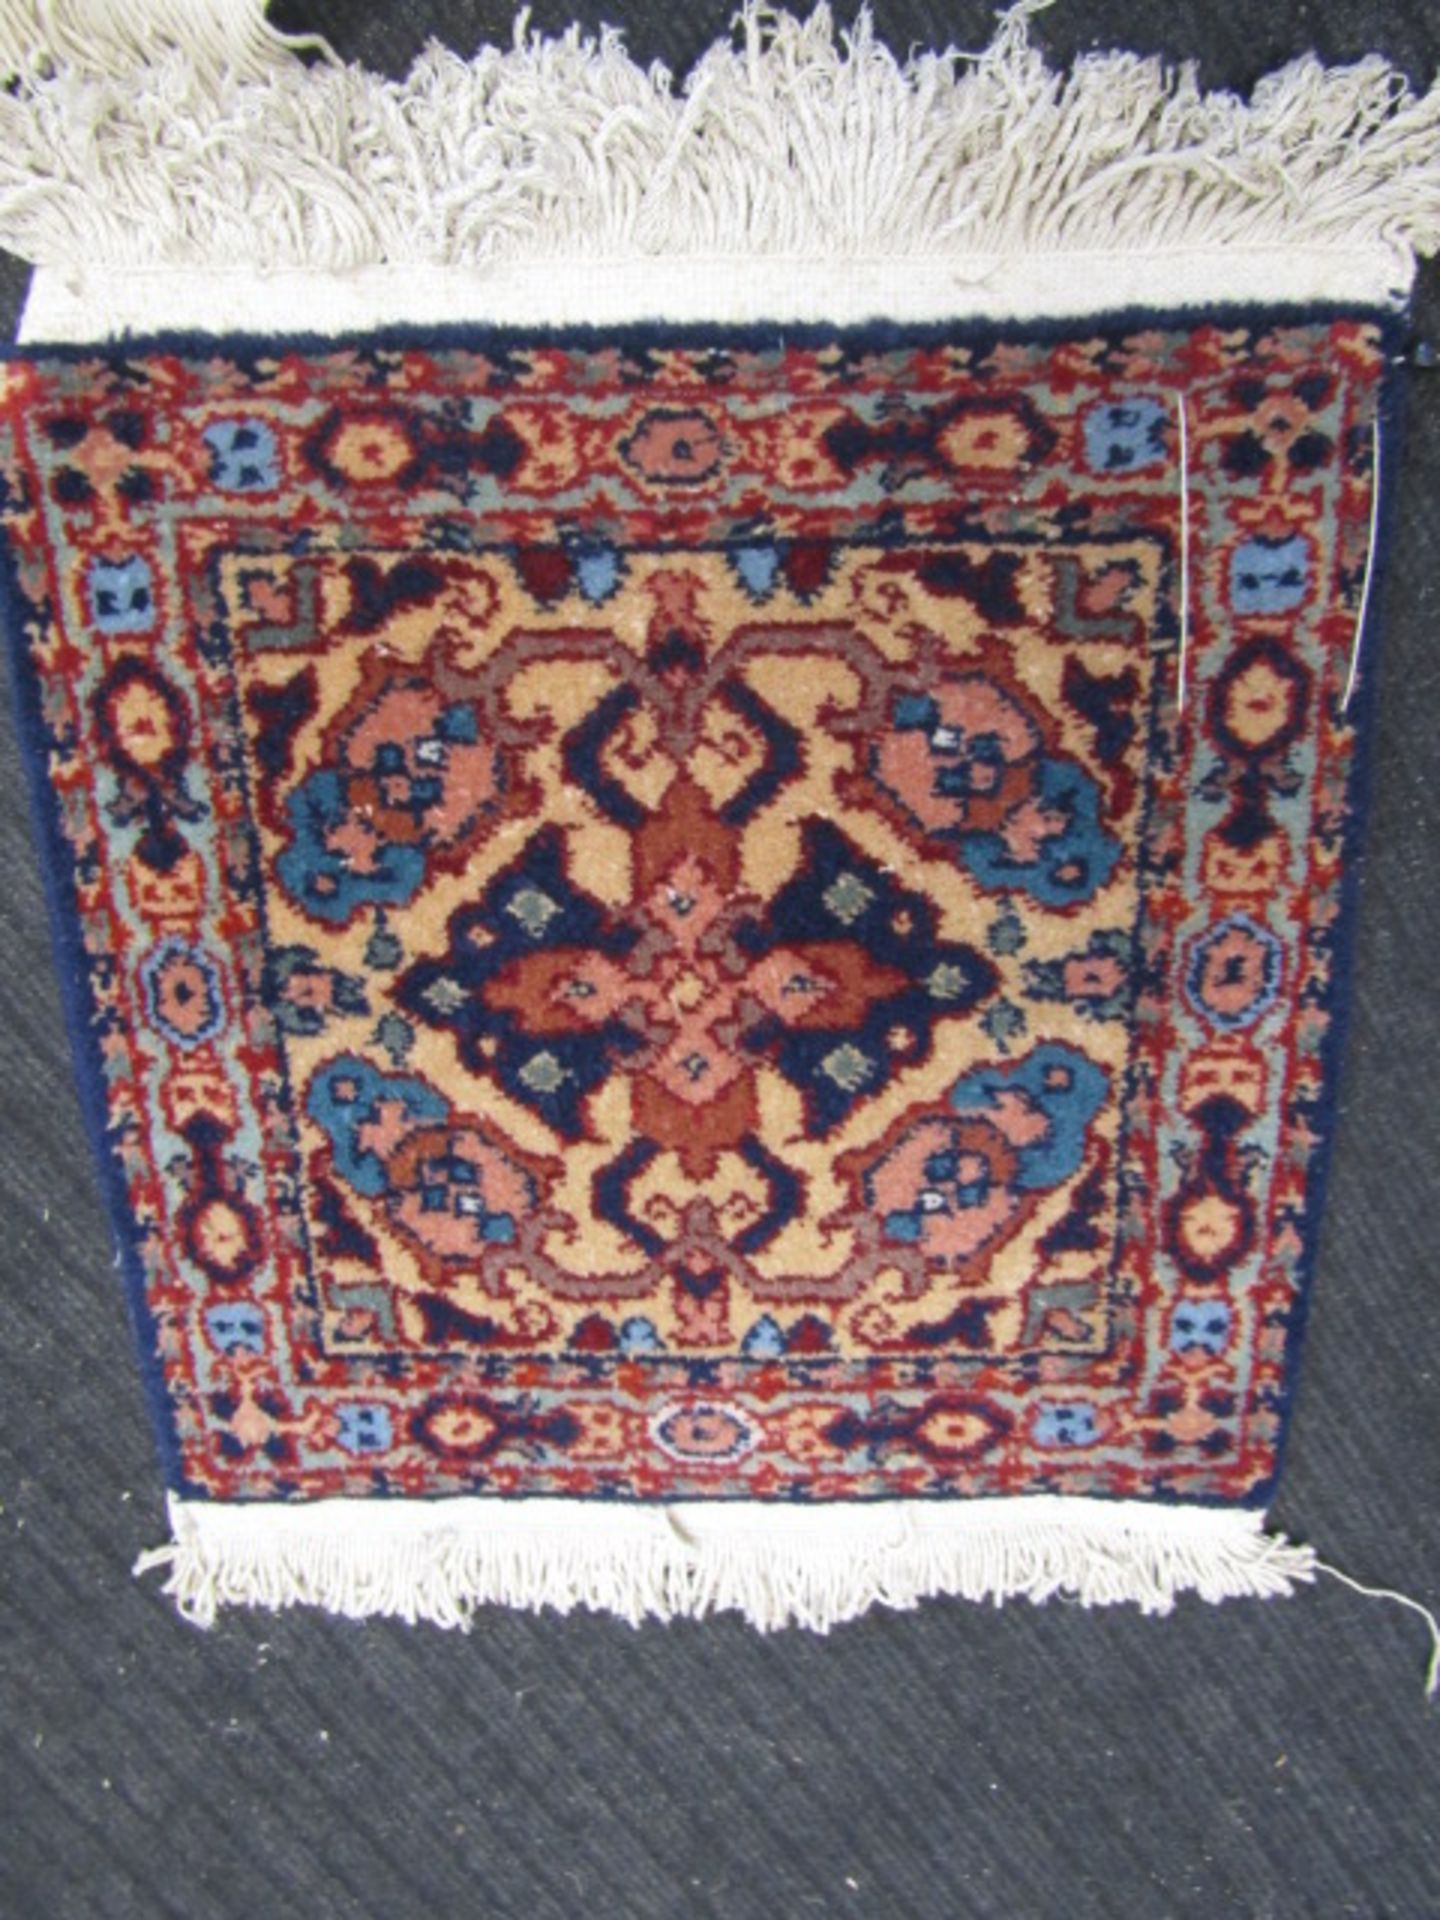 7 square wool Armenian carpet mats 44x42cm (excluding fringe) - Image 16 of 18